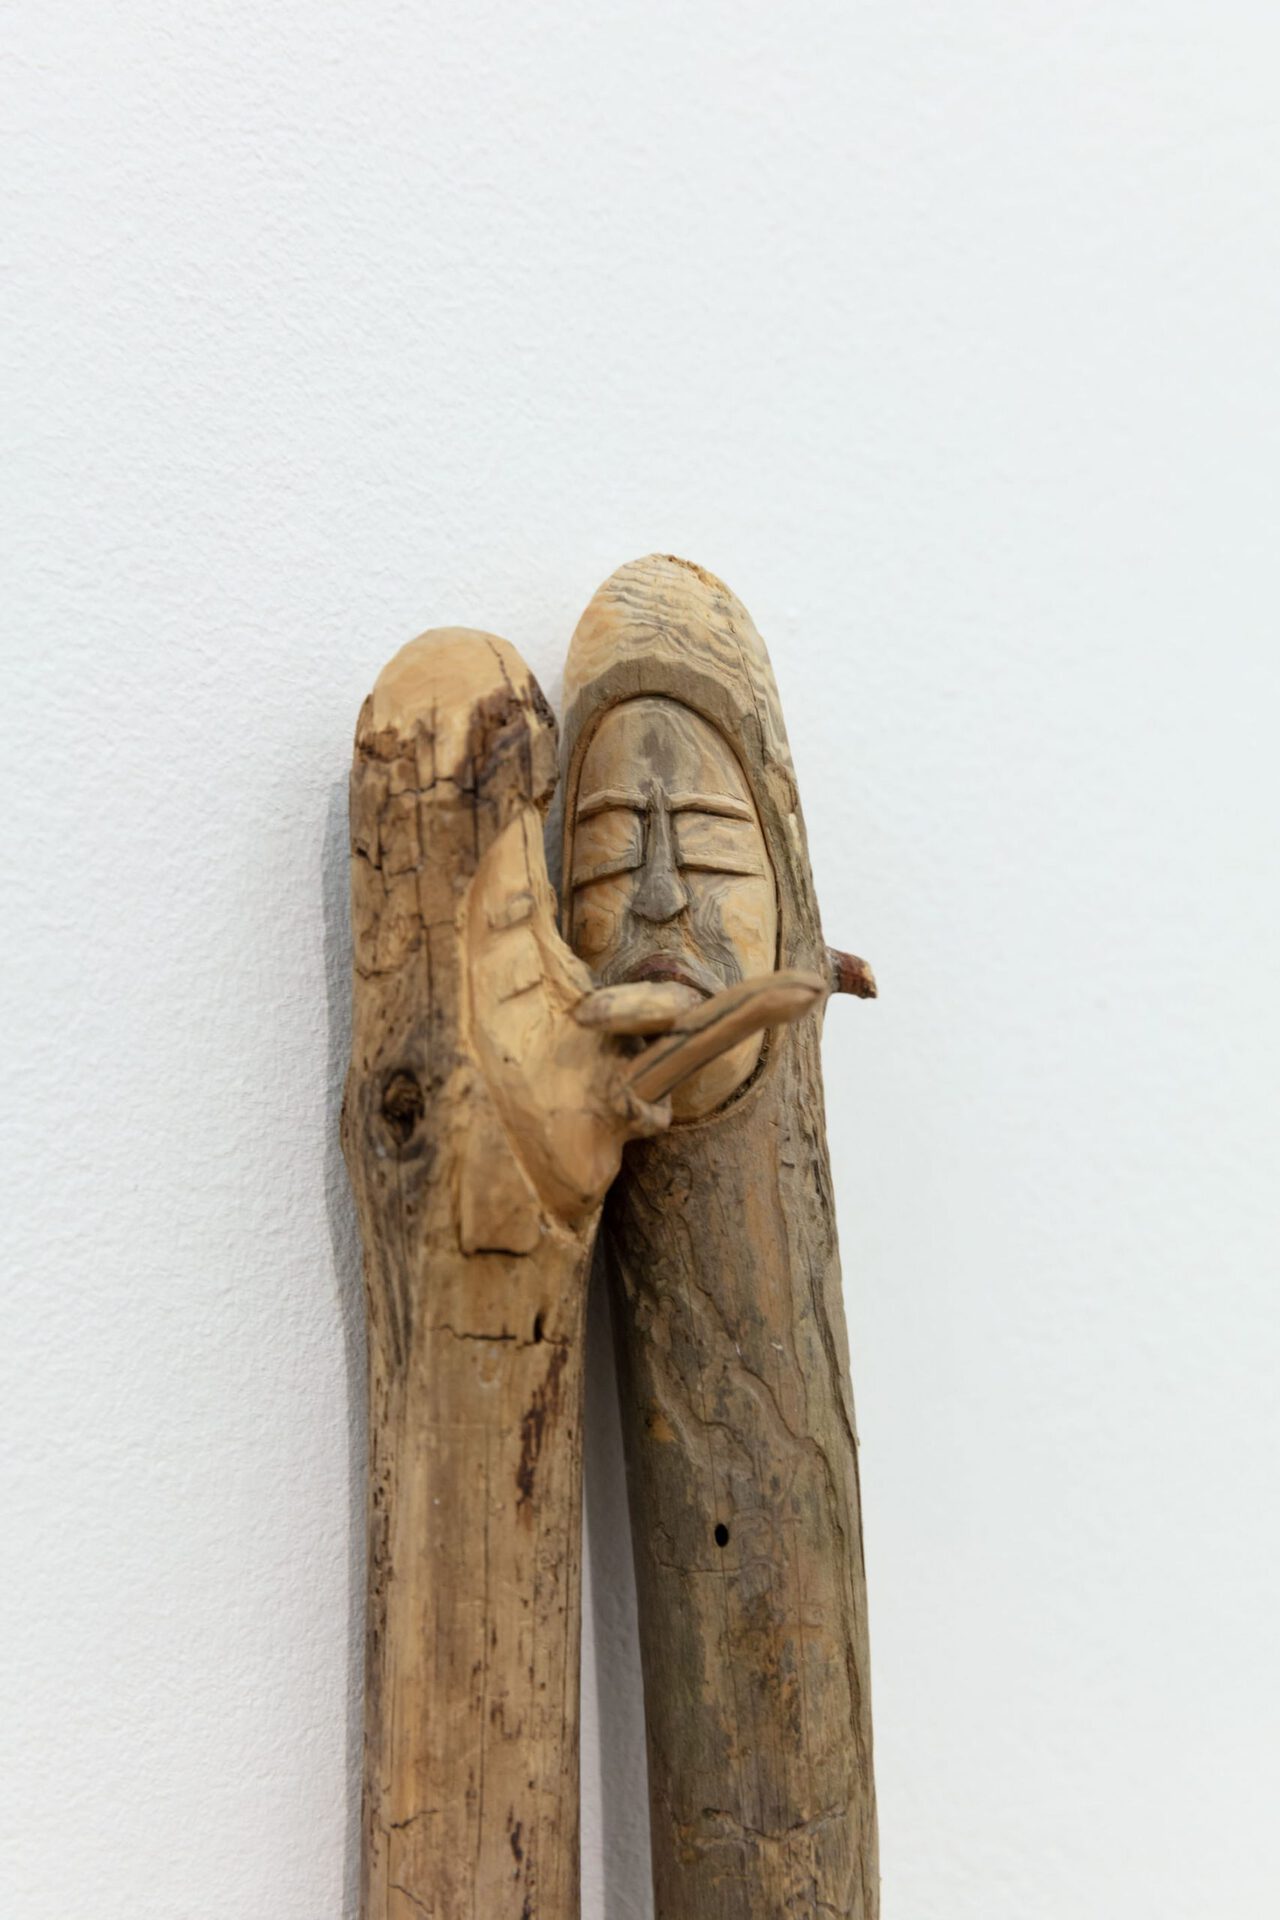 Birke Gorm, IOU, 2021, wood, 41 × 8 × 7 cm, Courtesy the artist and Croy Nielsen, Vienna.